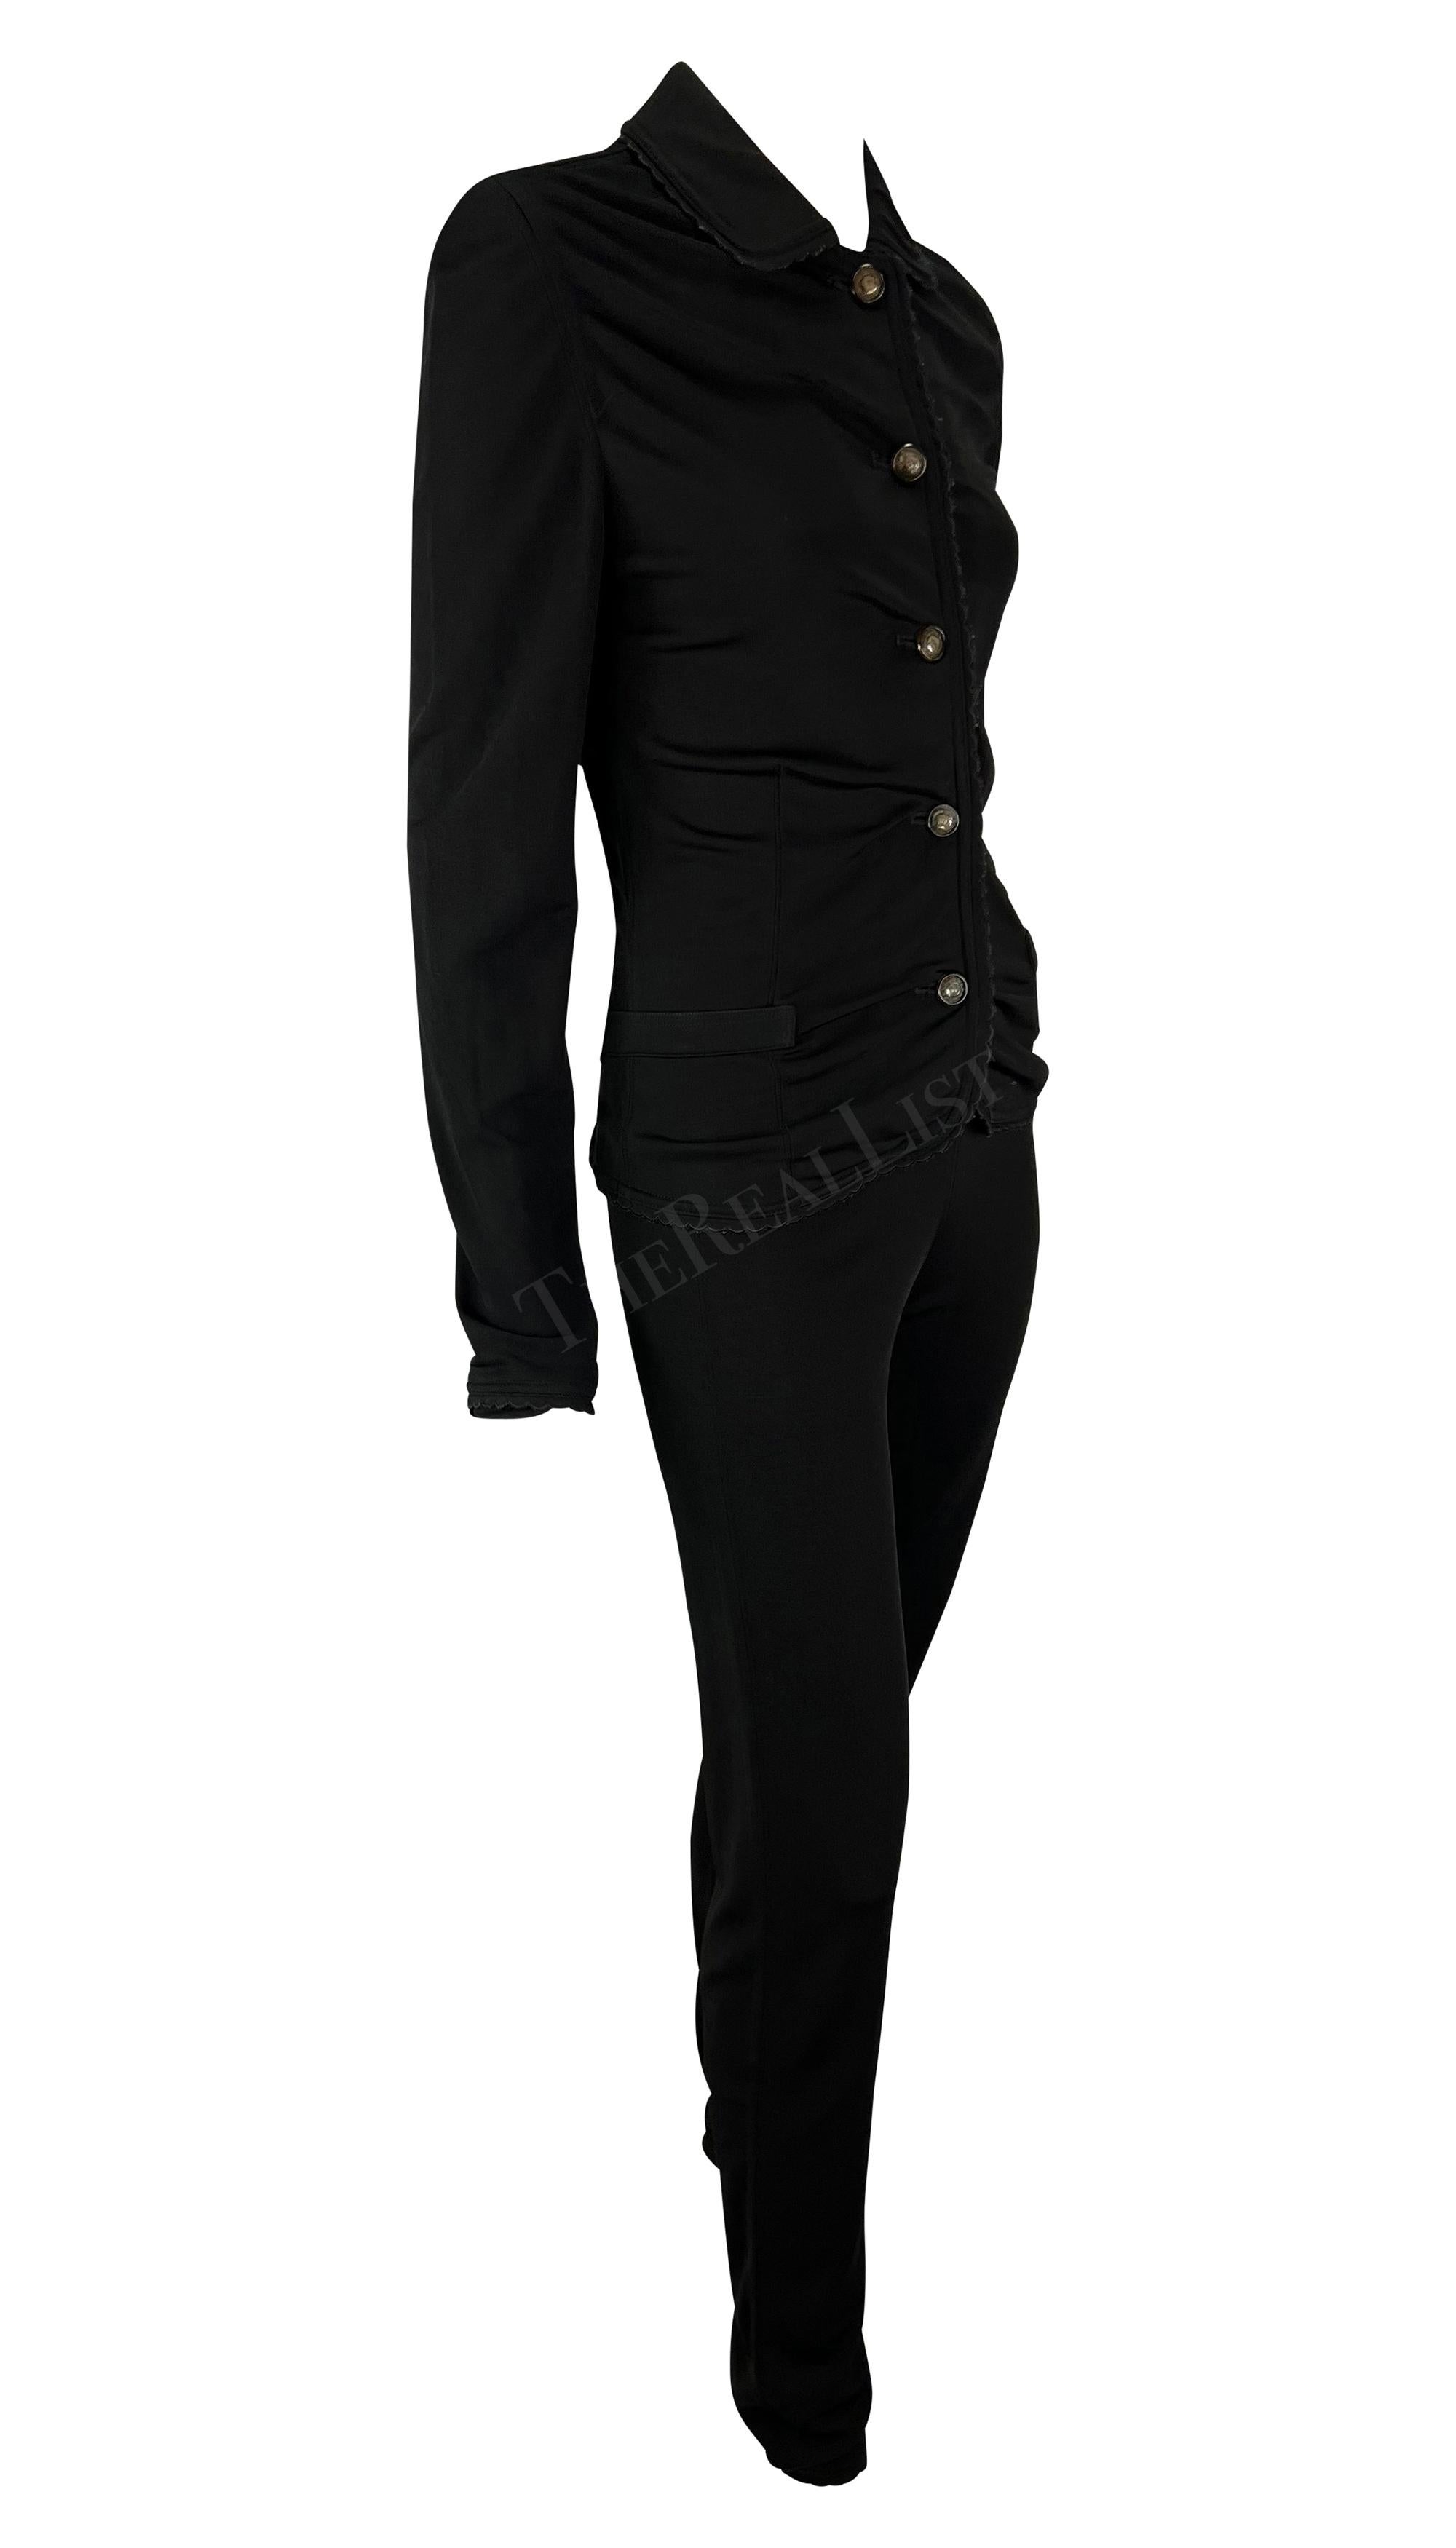 S/S 1997 Gianni Versace Black Scalloped Stretch Medusa Pant Set For Sale 1